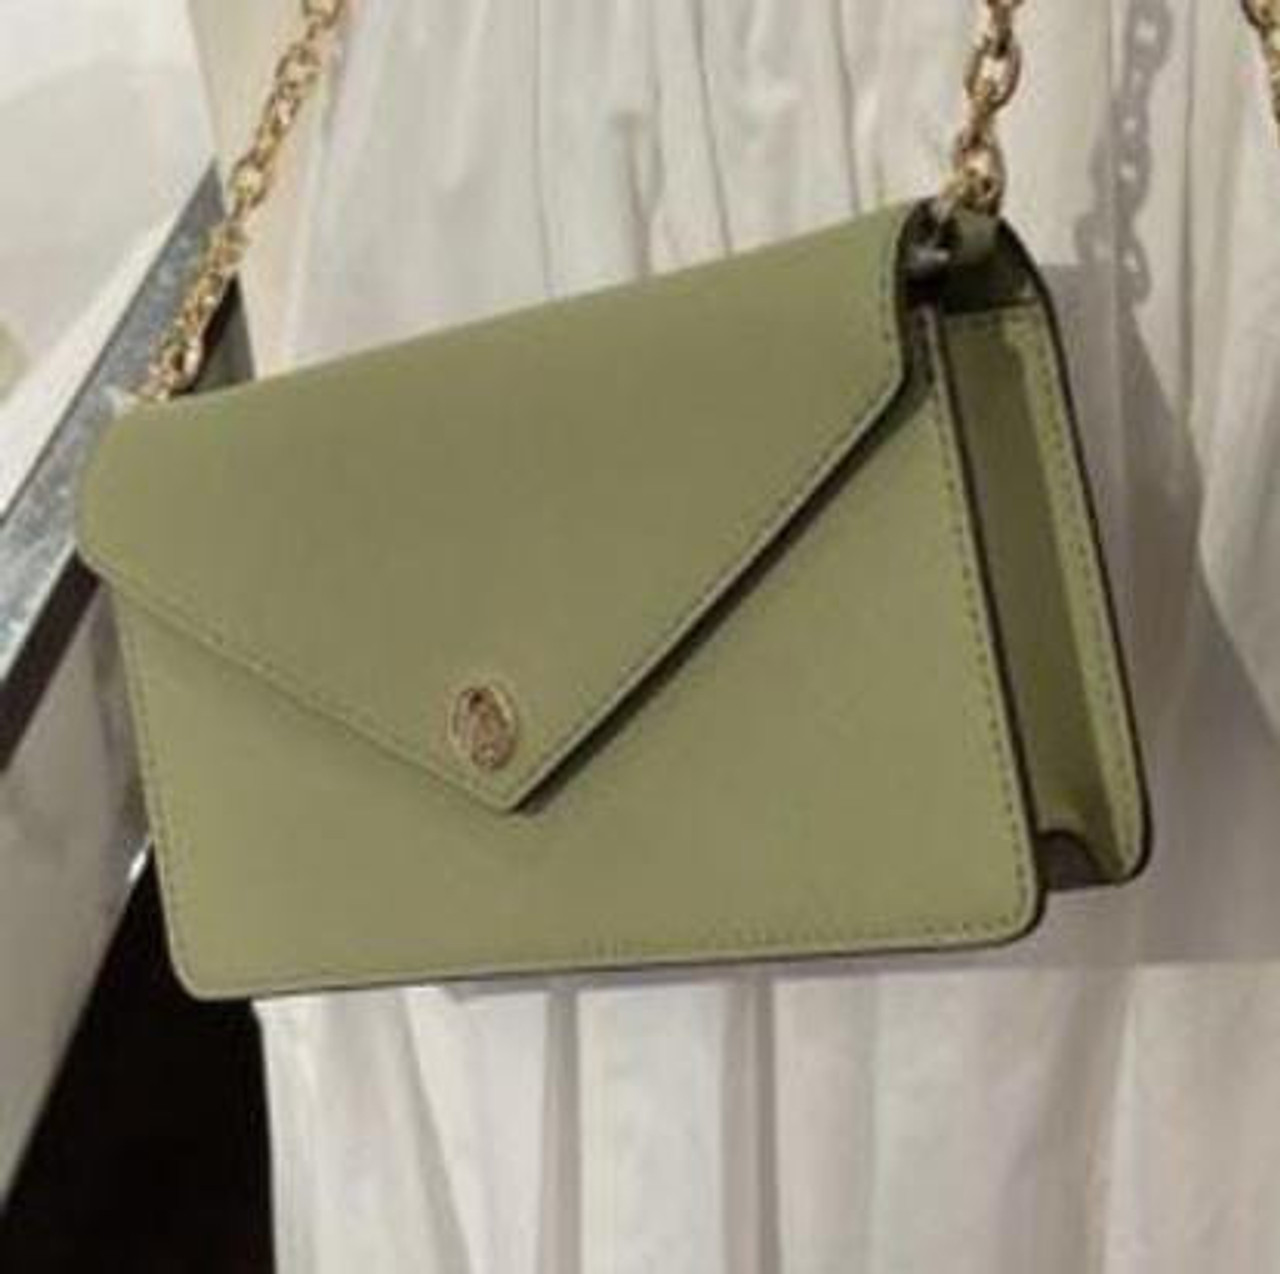 Michael Kors, Bags, Michael Kors Saffiano Leather Envelope Crossbody Bag